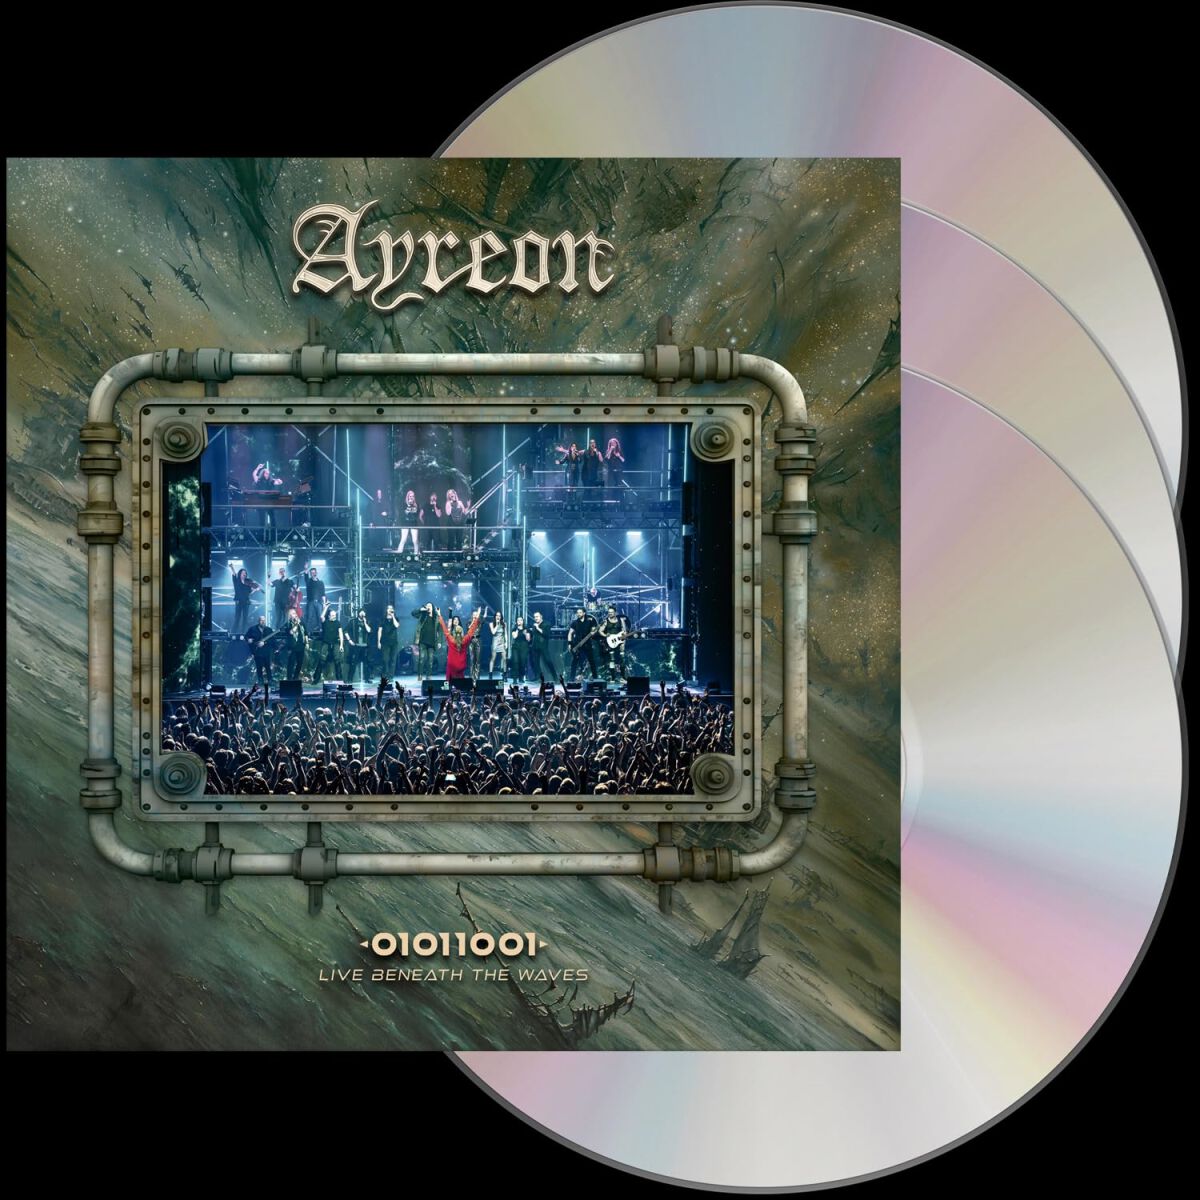 Ayreon 01011001 - Live beneath the waves DVD multicolor